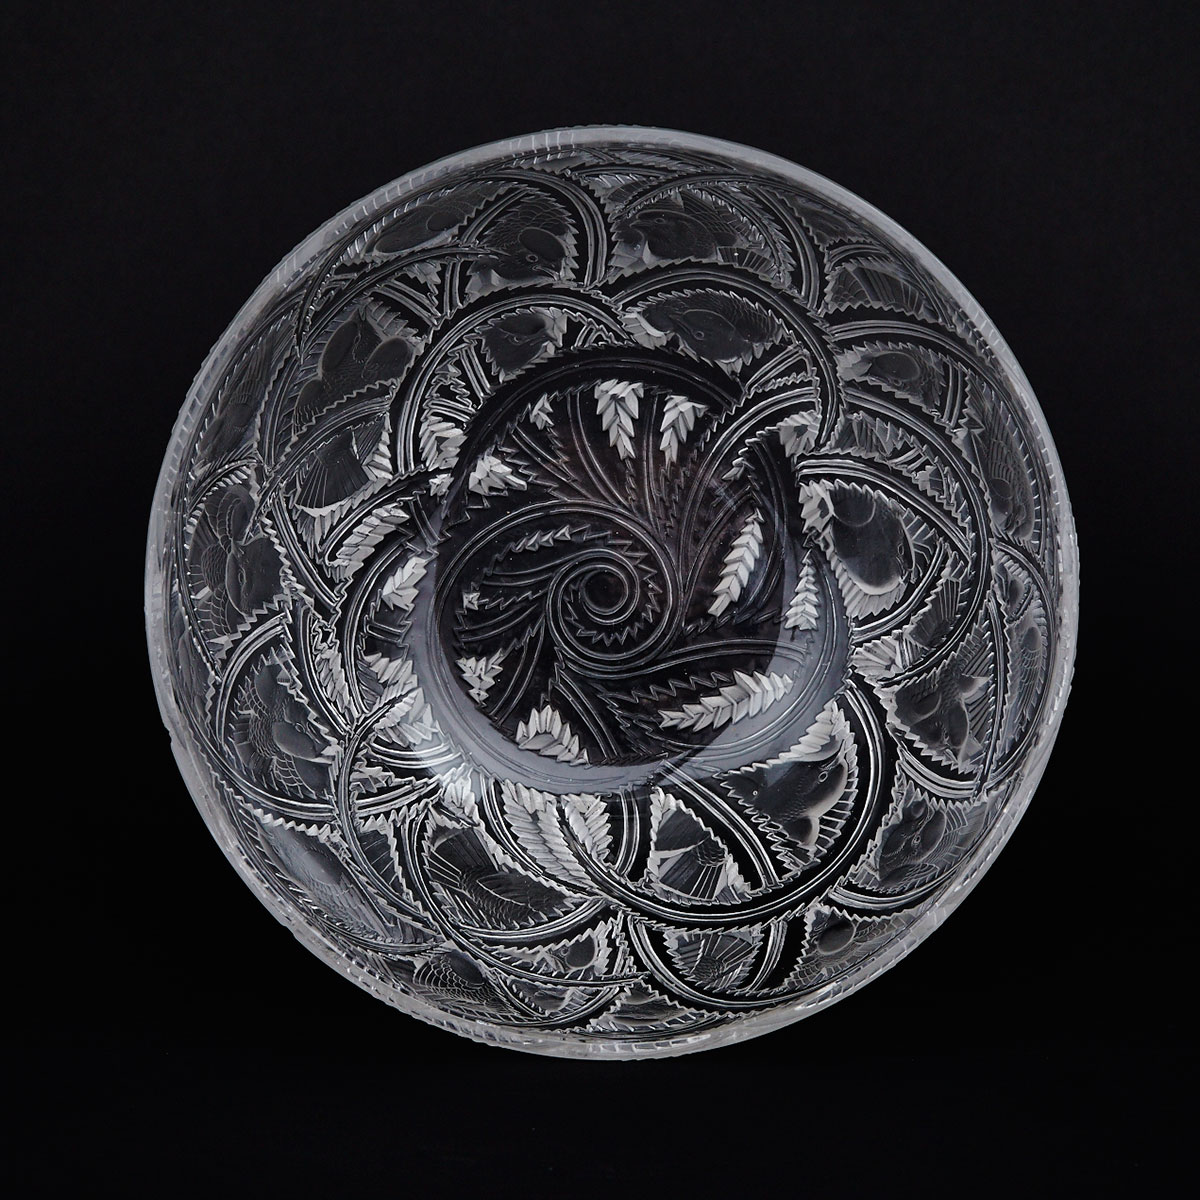 ‘Pinsons’, Lalique Glass Bowl, post-1945